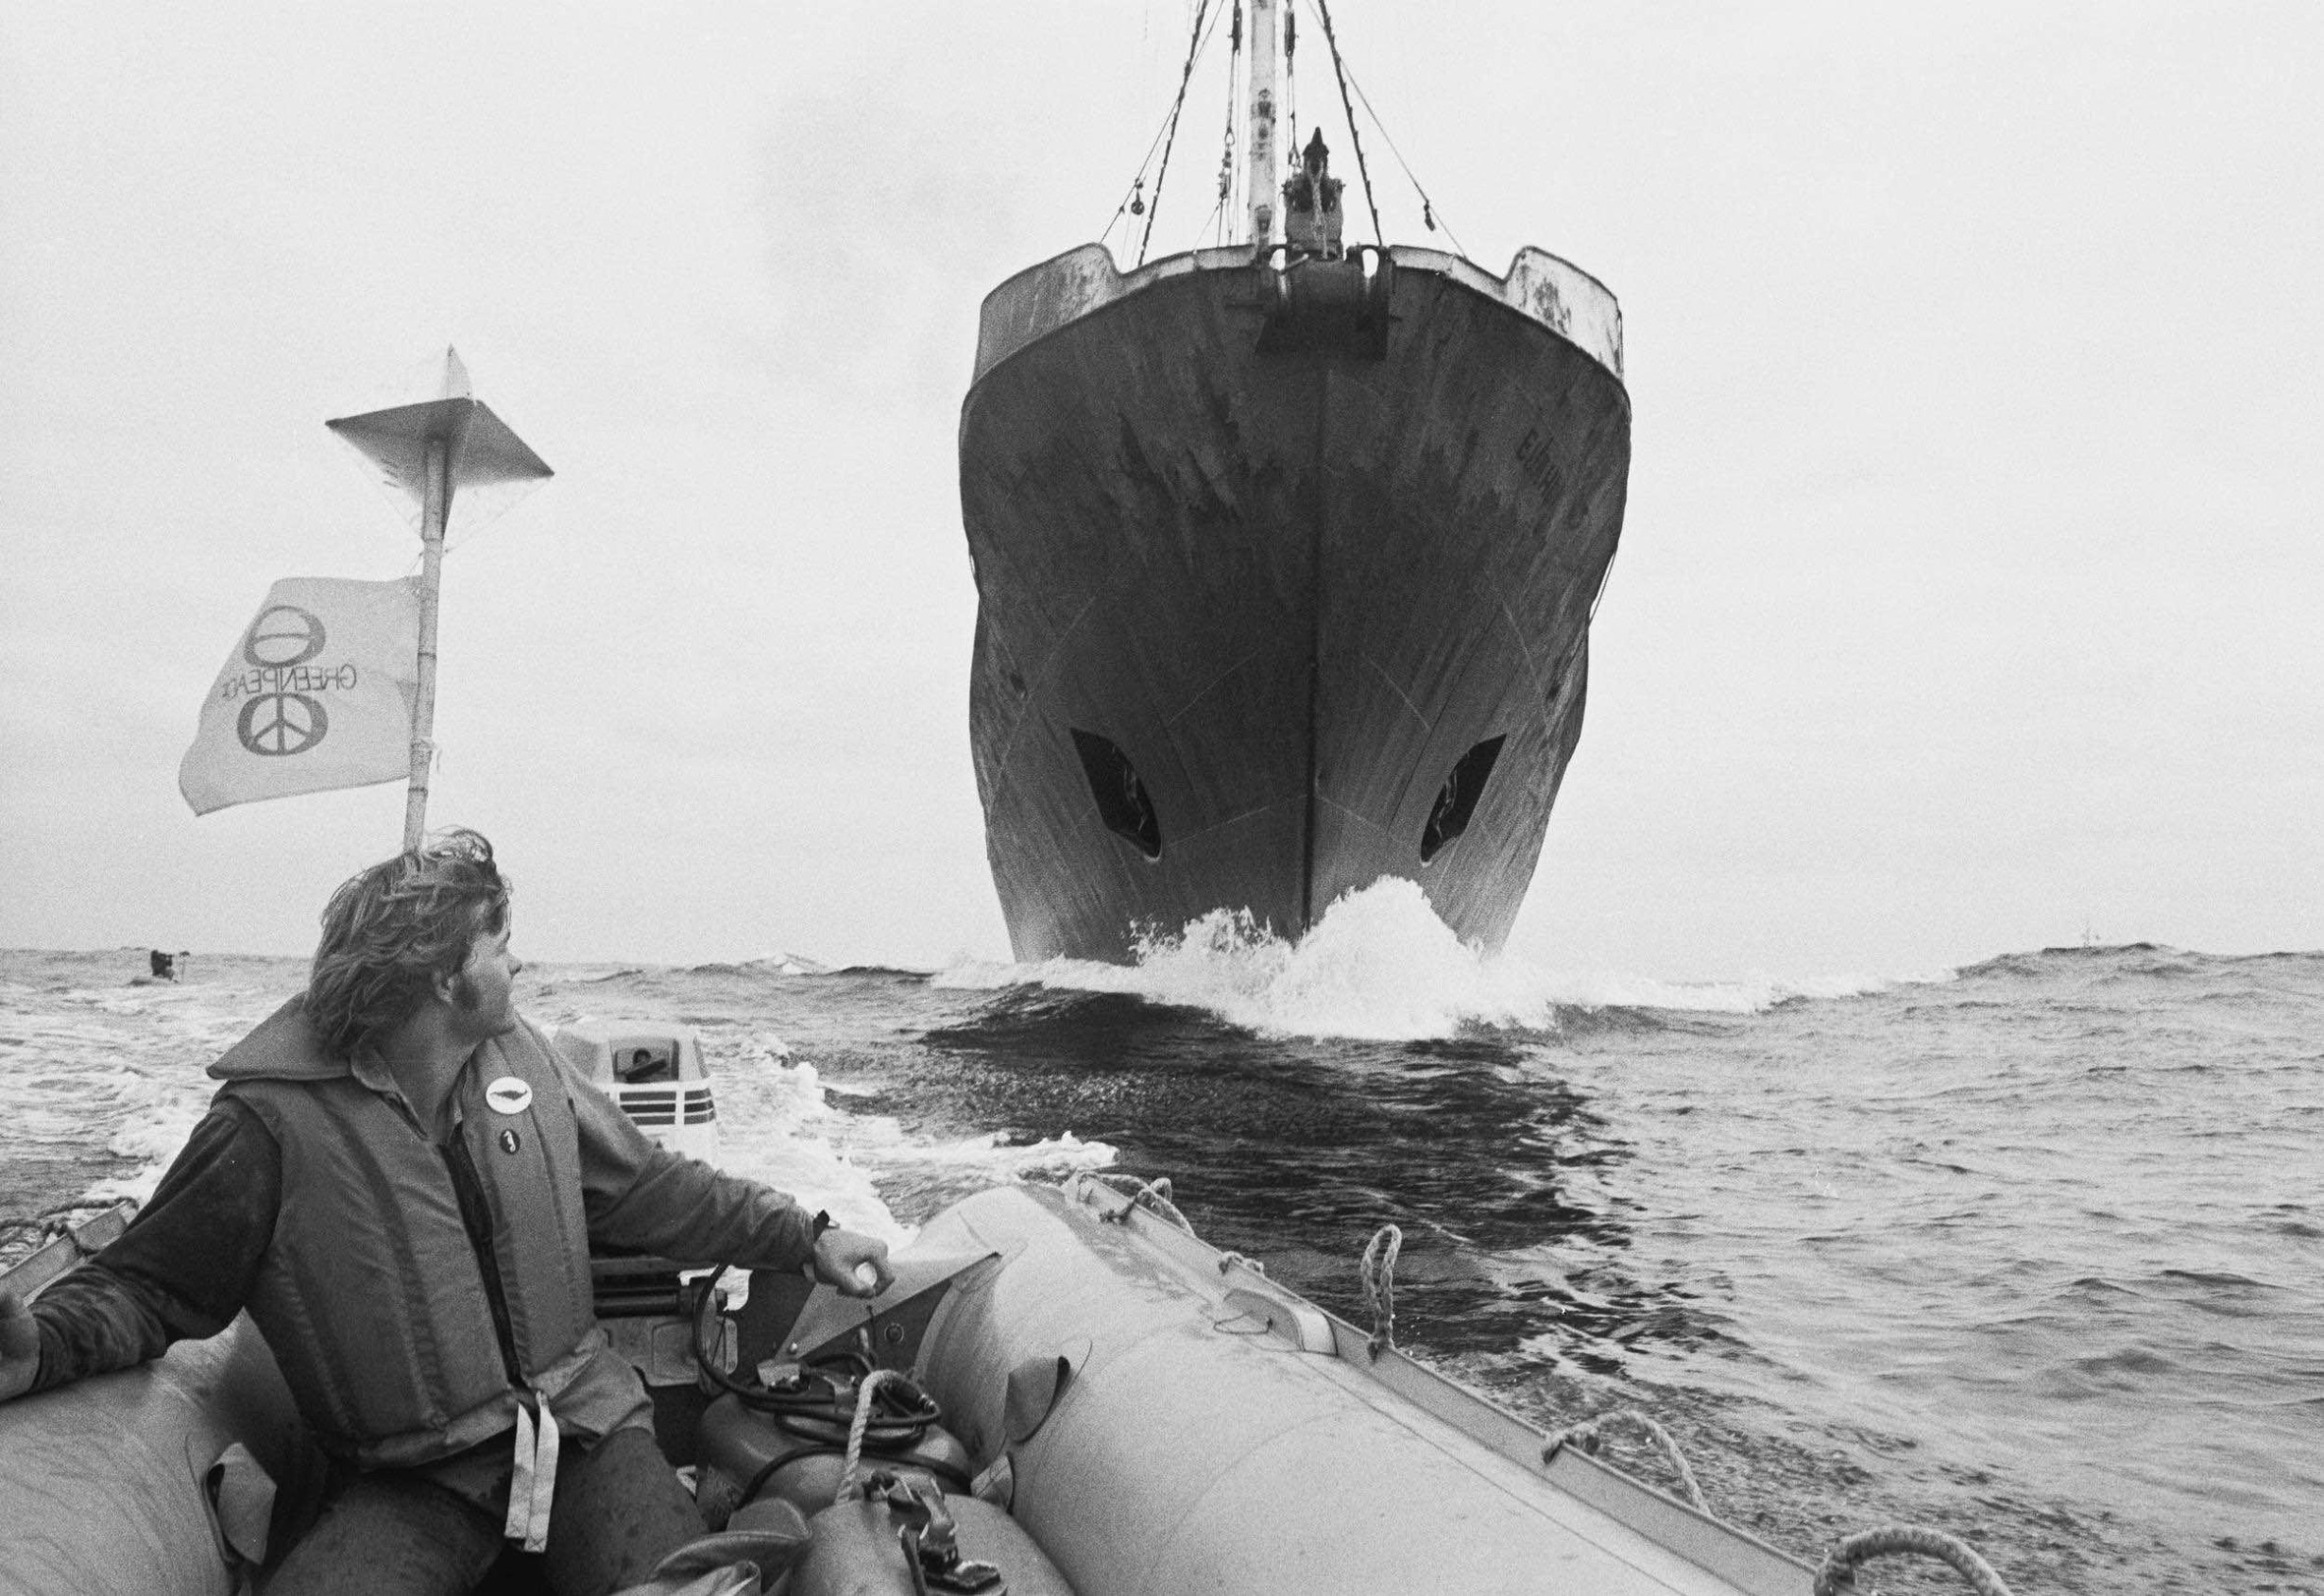  Mike Bailey, Greenpeace, blockading Russian harpoon ship in 1976 